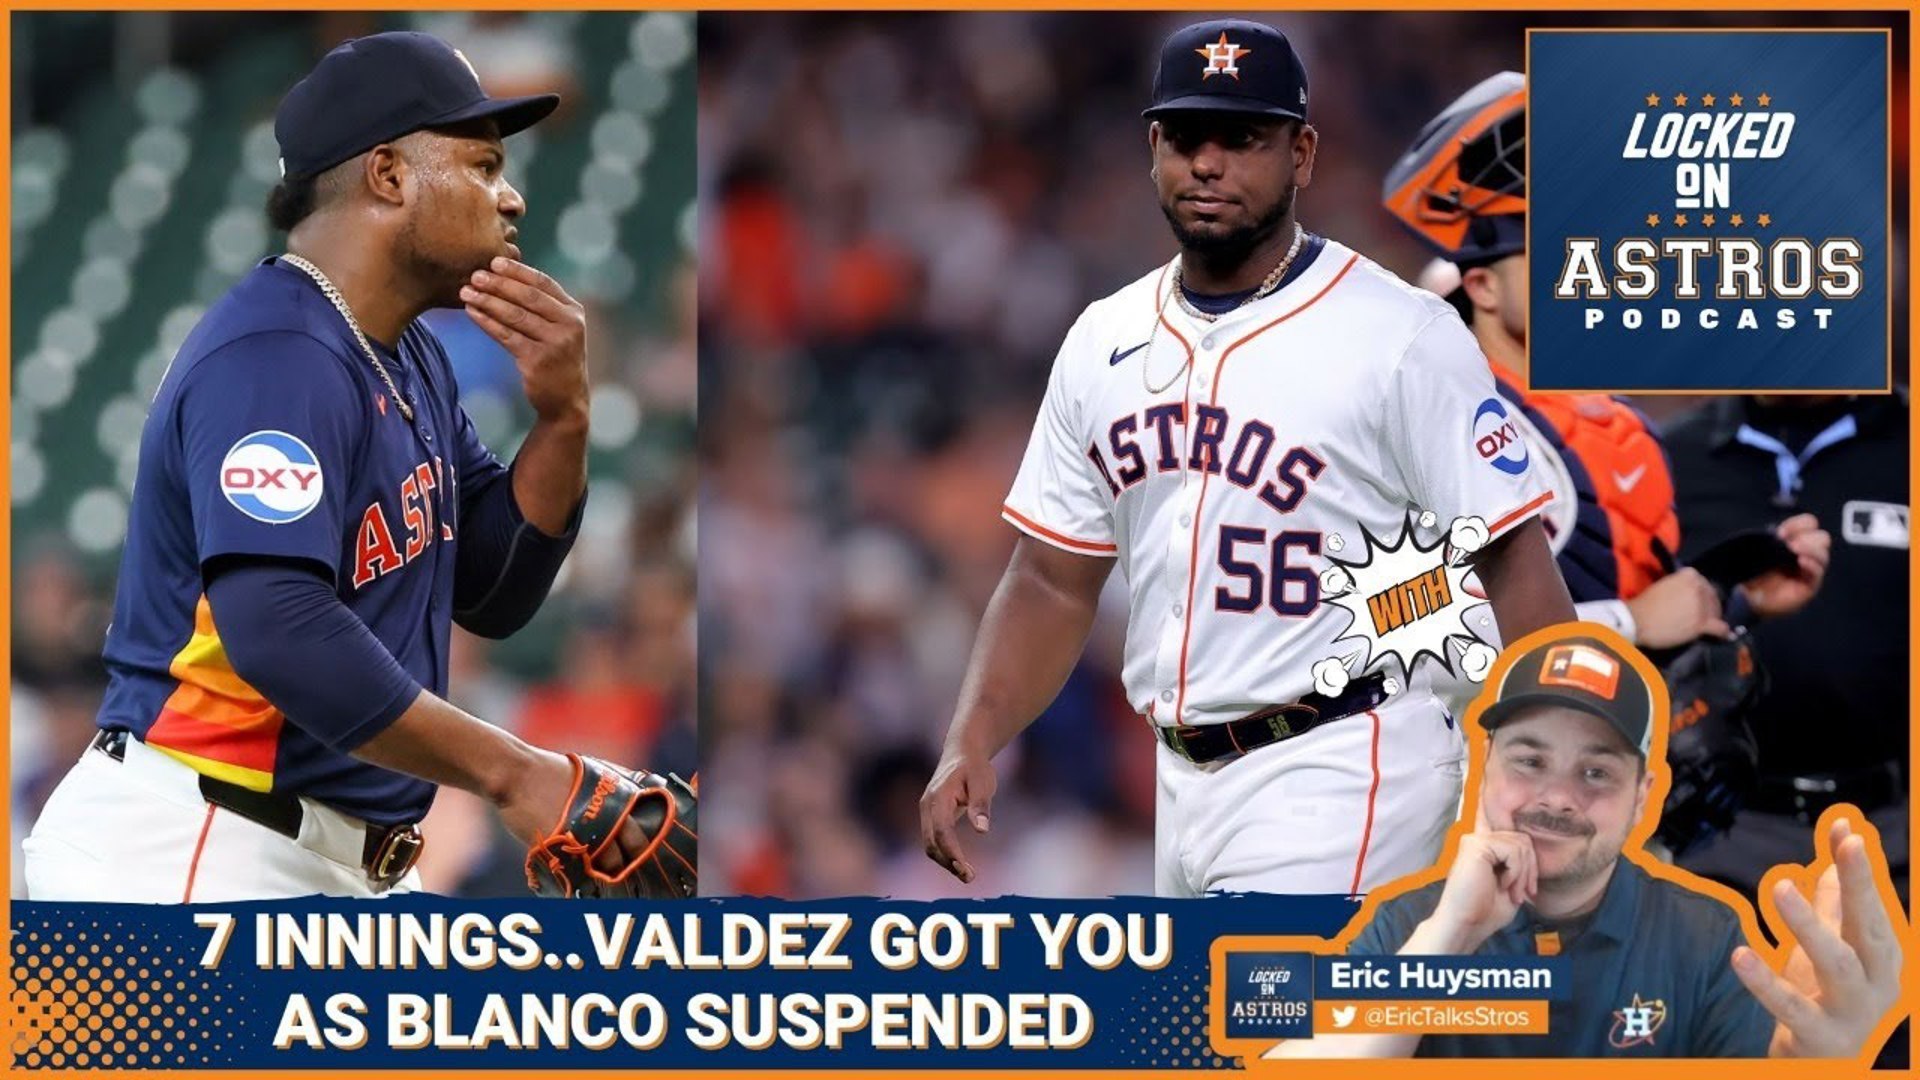 Astros win behind Valdez in the wake of Blanco's suspension